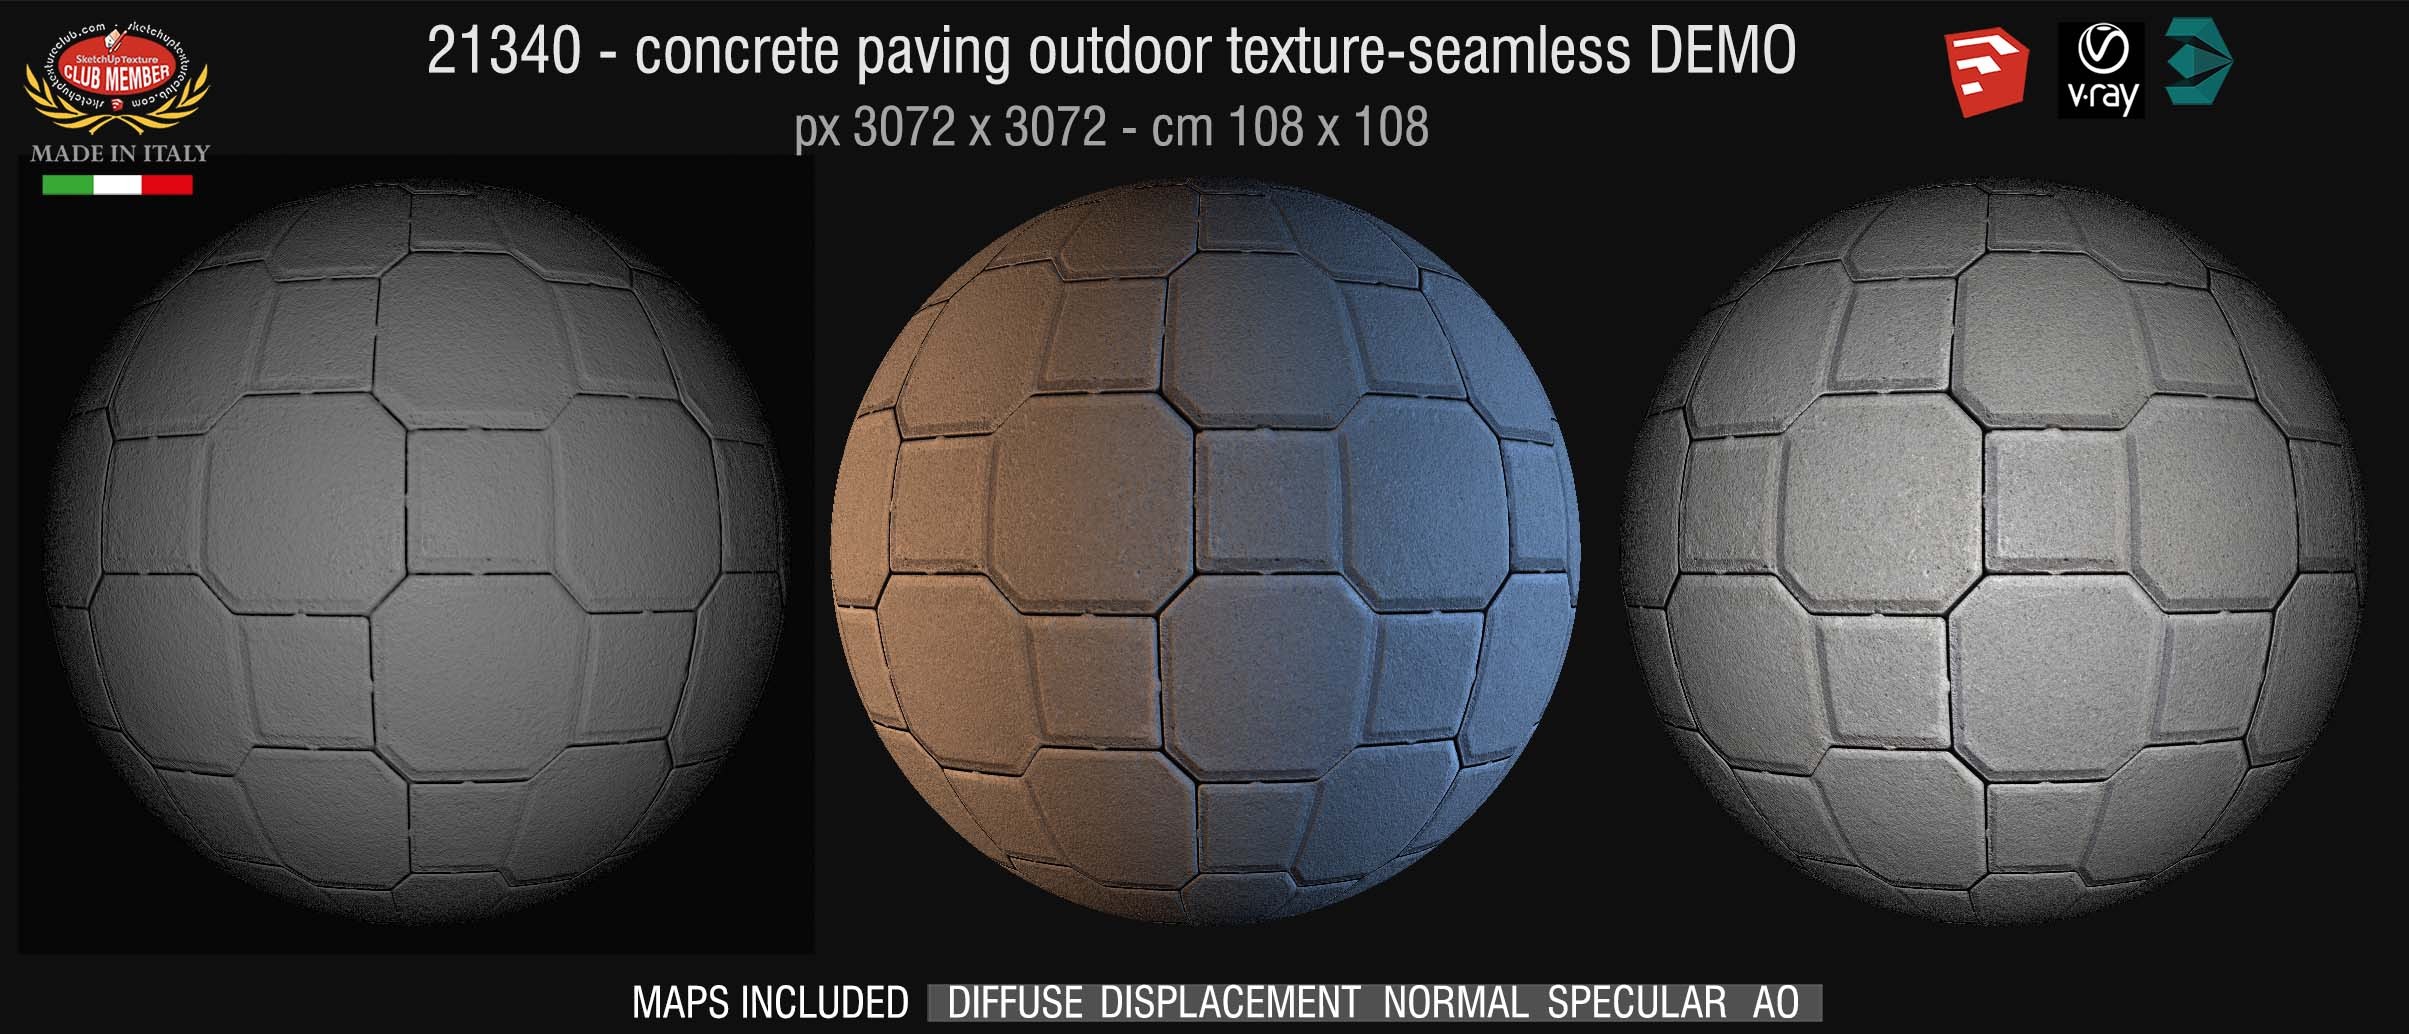 21340 HR concrete paving outdoor texture seamless + maps DEMO